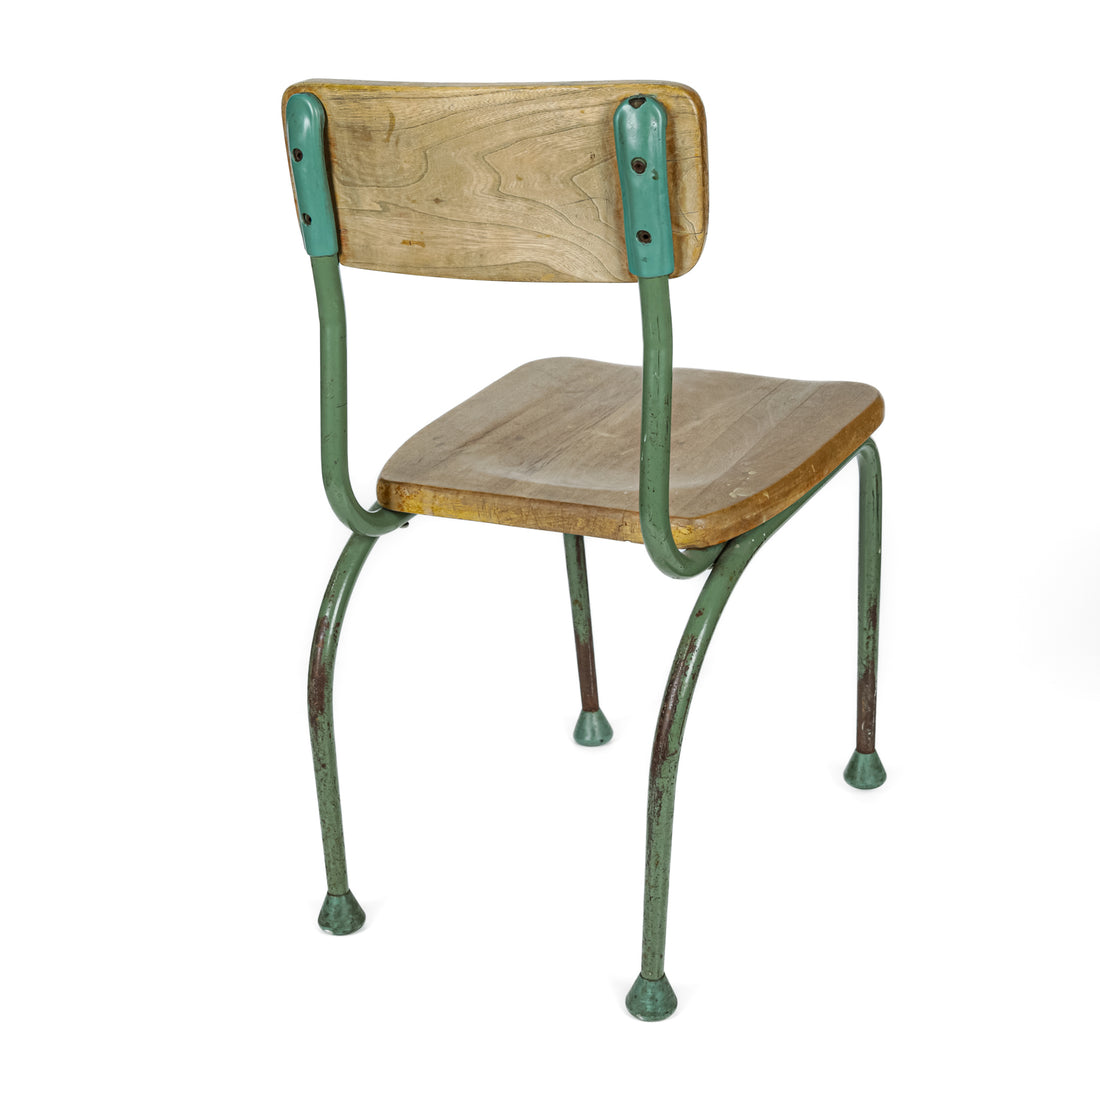 Vintage Steel & Maple Childs Chair